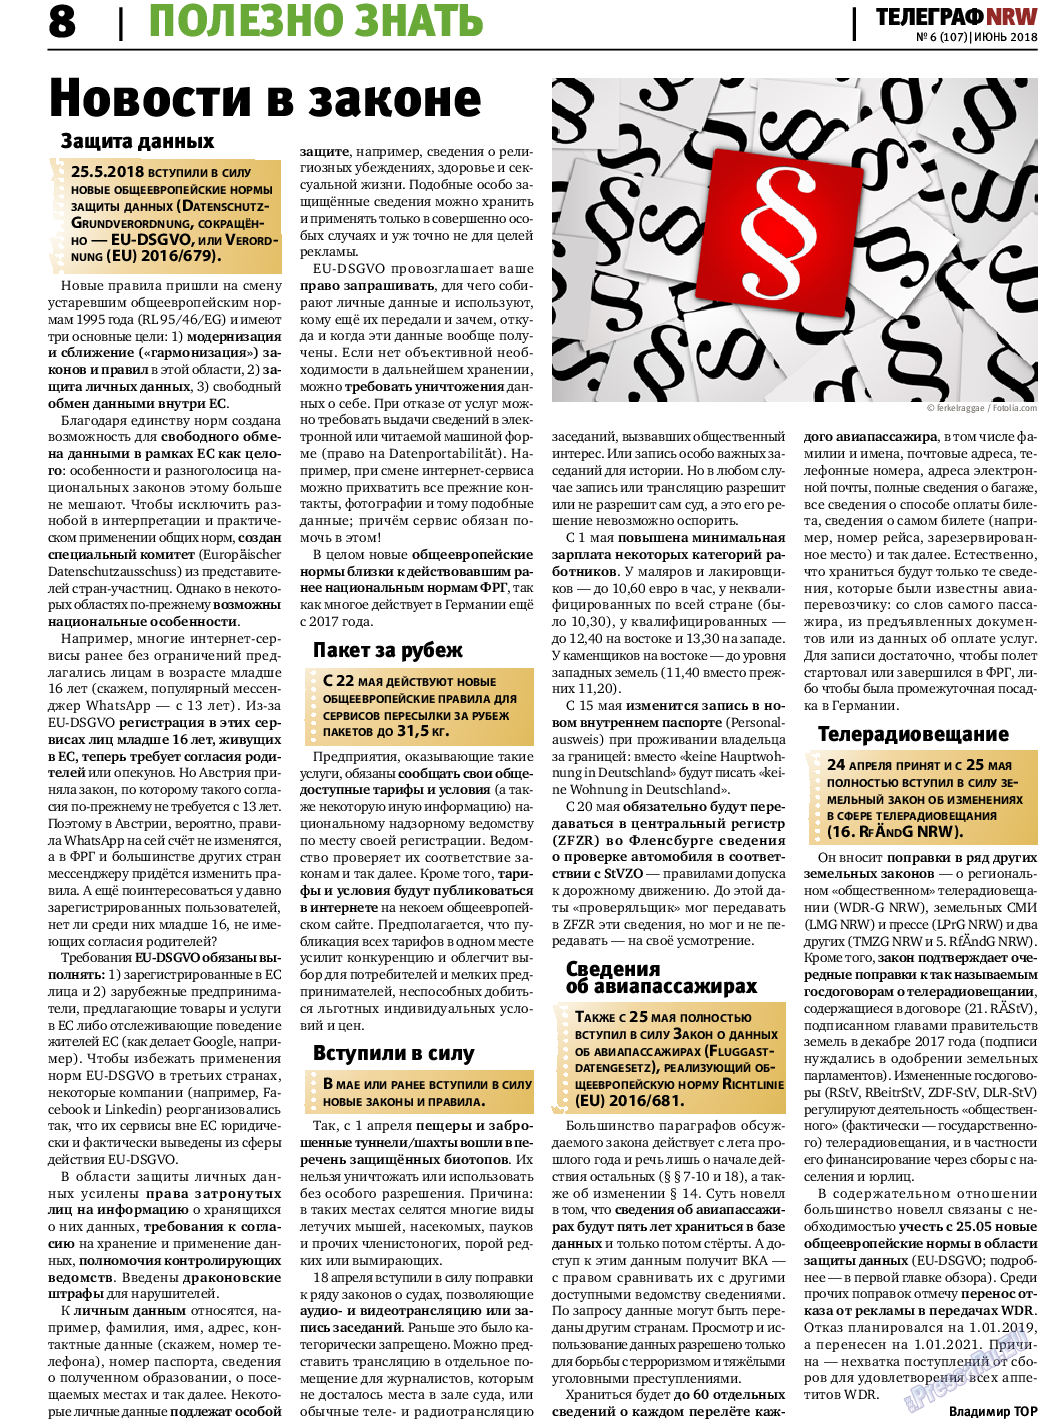 Телеграф NRW, газета. 2018 №6 стр.8